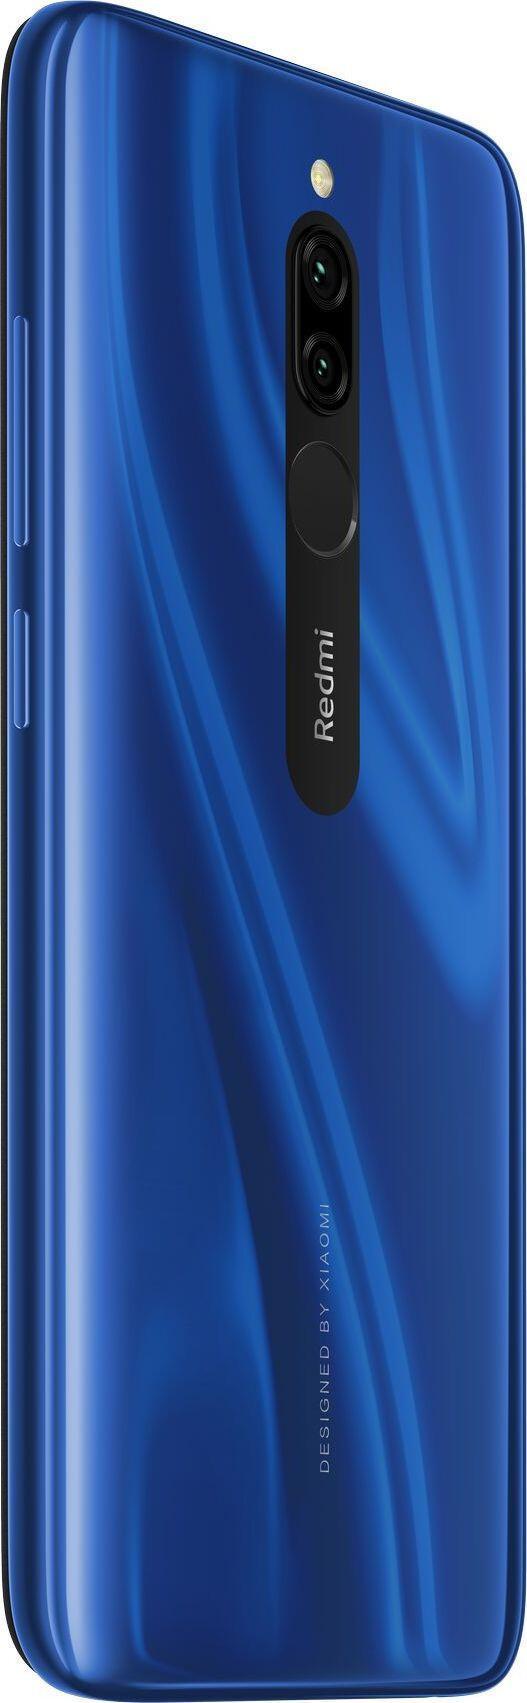 Купить Смартфон Xiaomi Redmi 8 3/32Gb Sapfire Blue